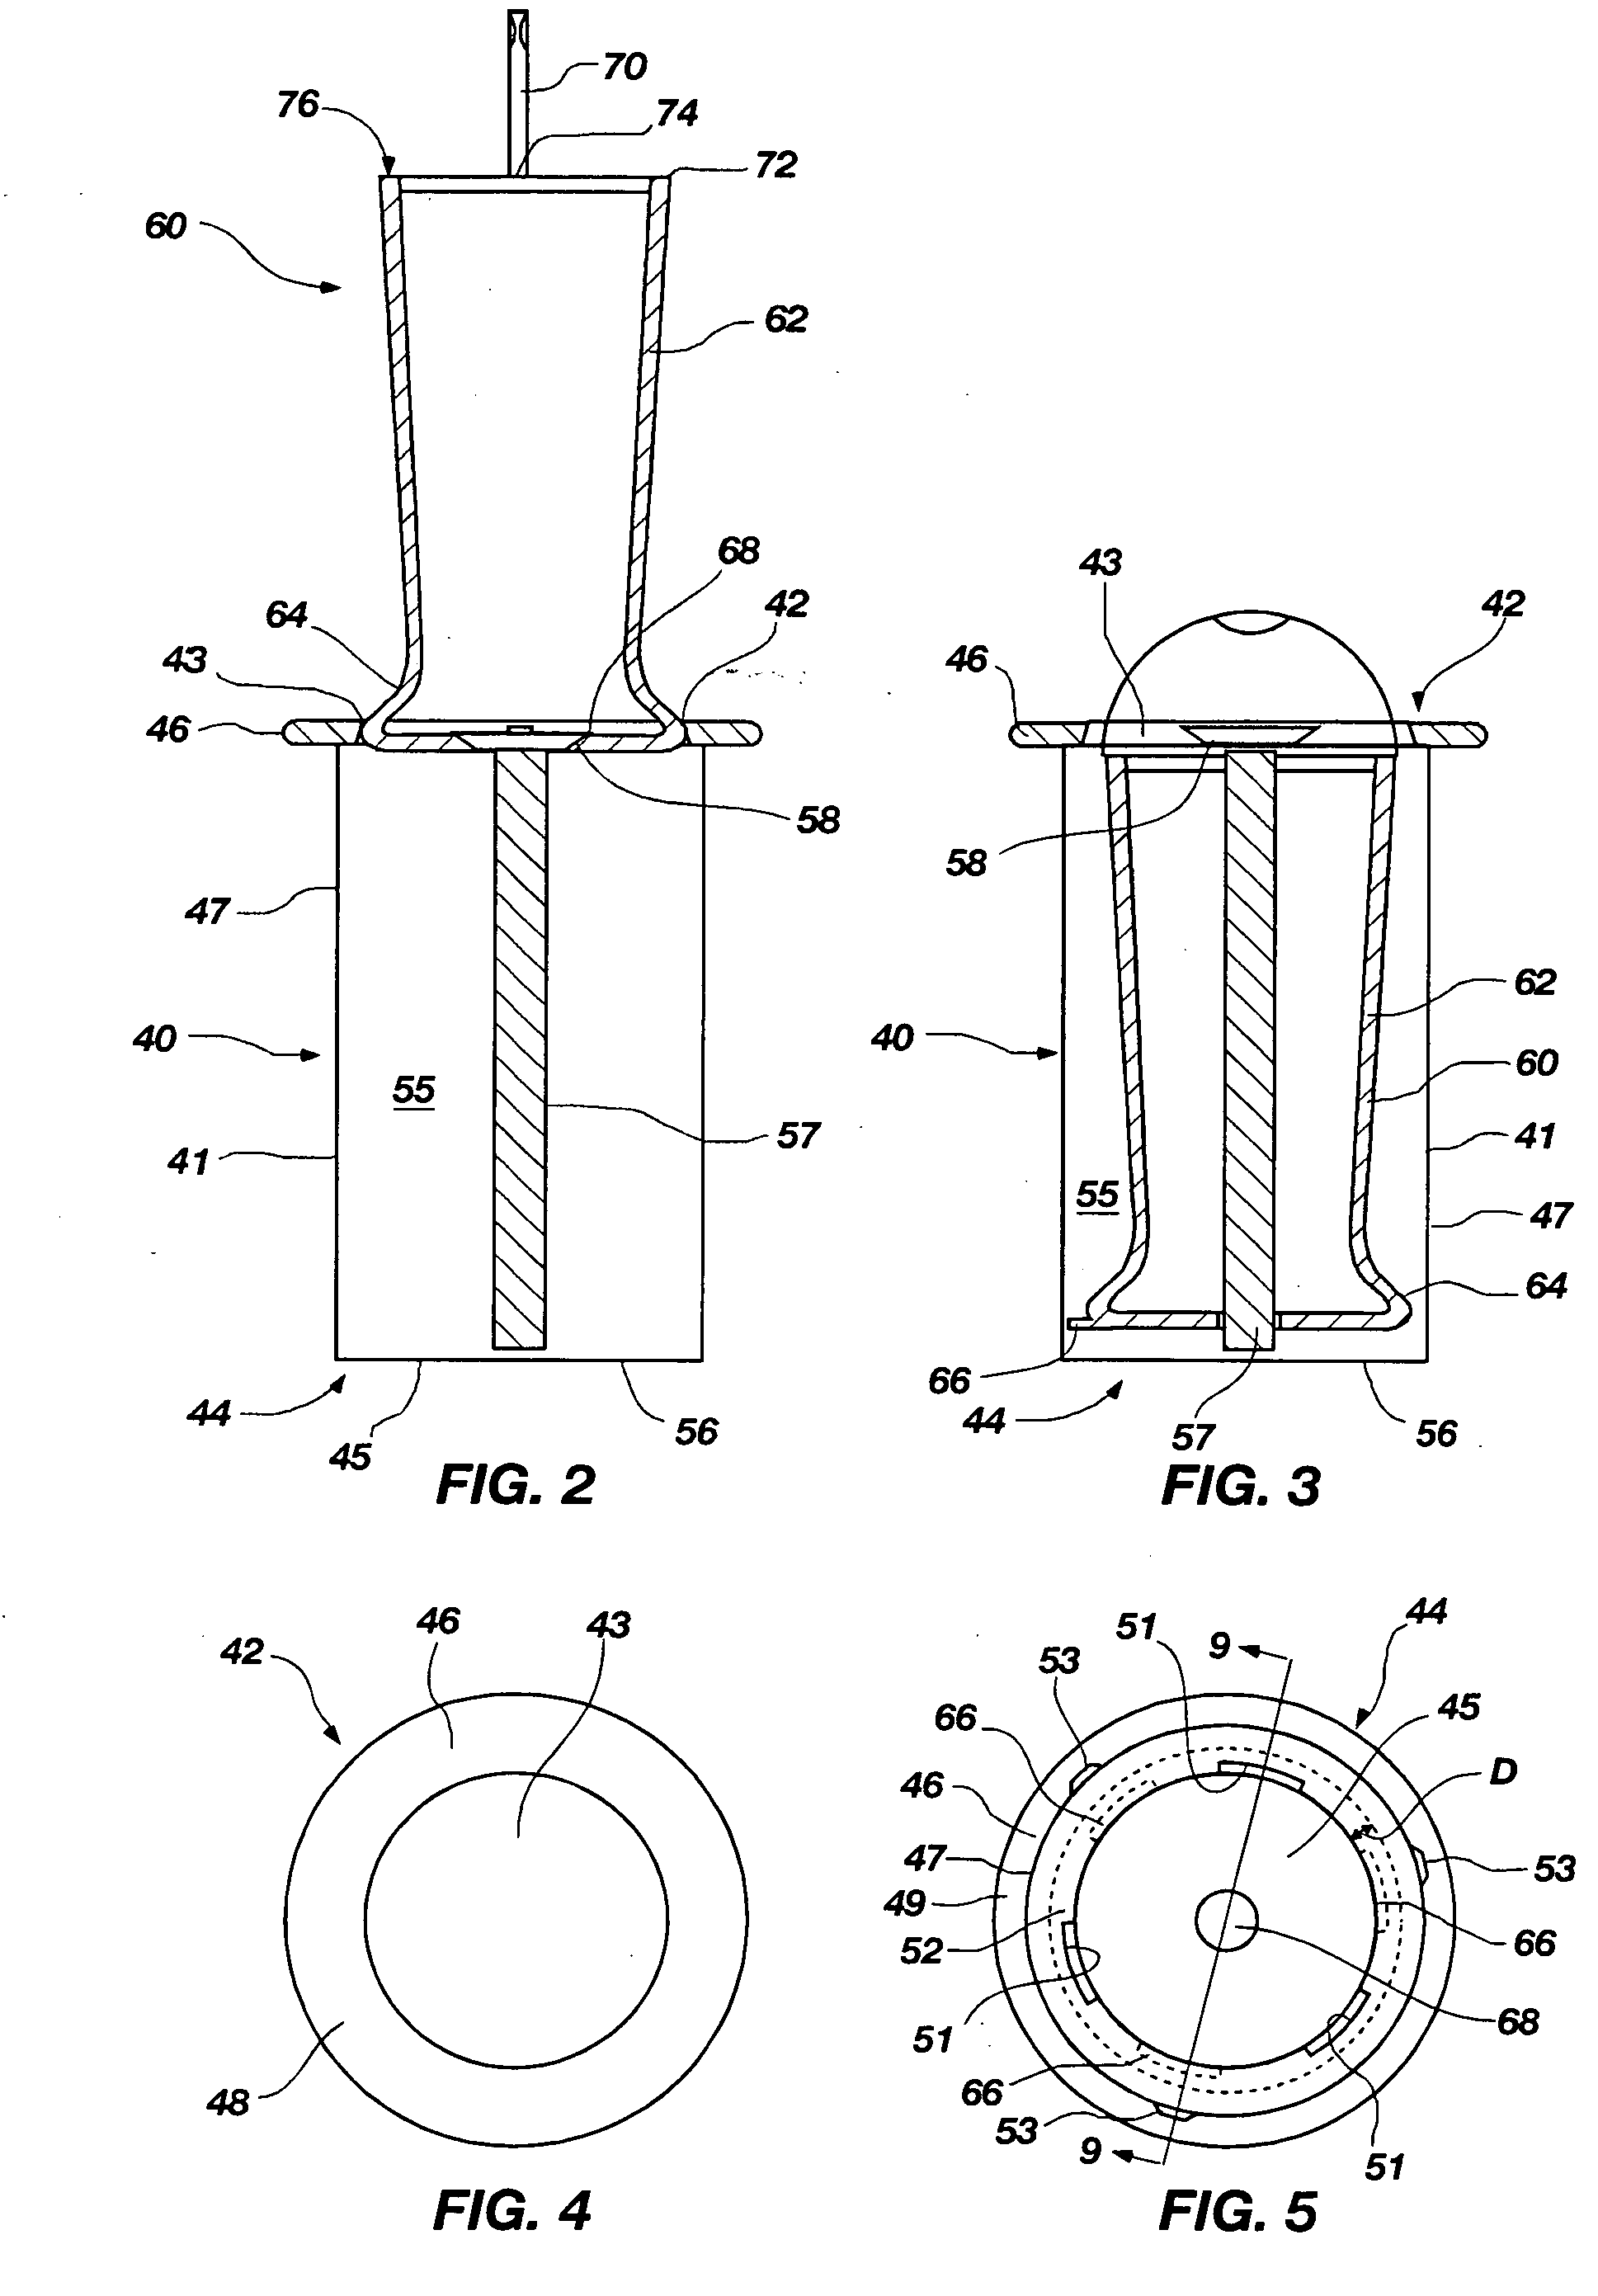 Cemetery vase and locking mechanism